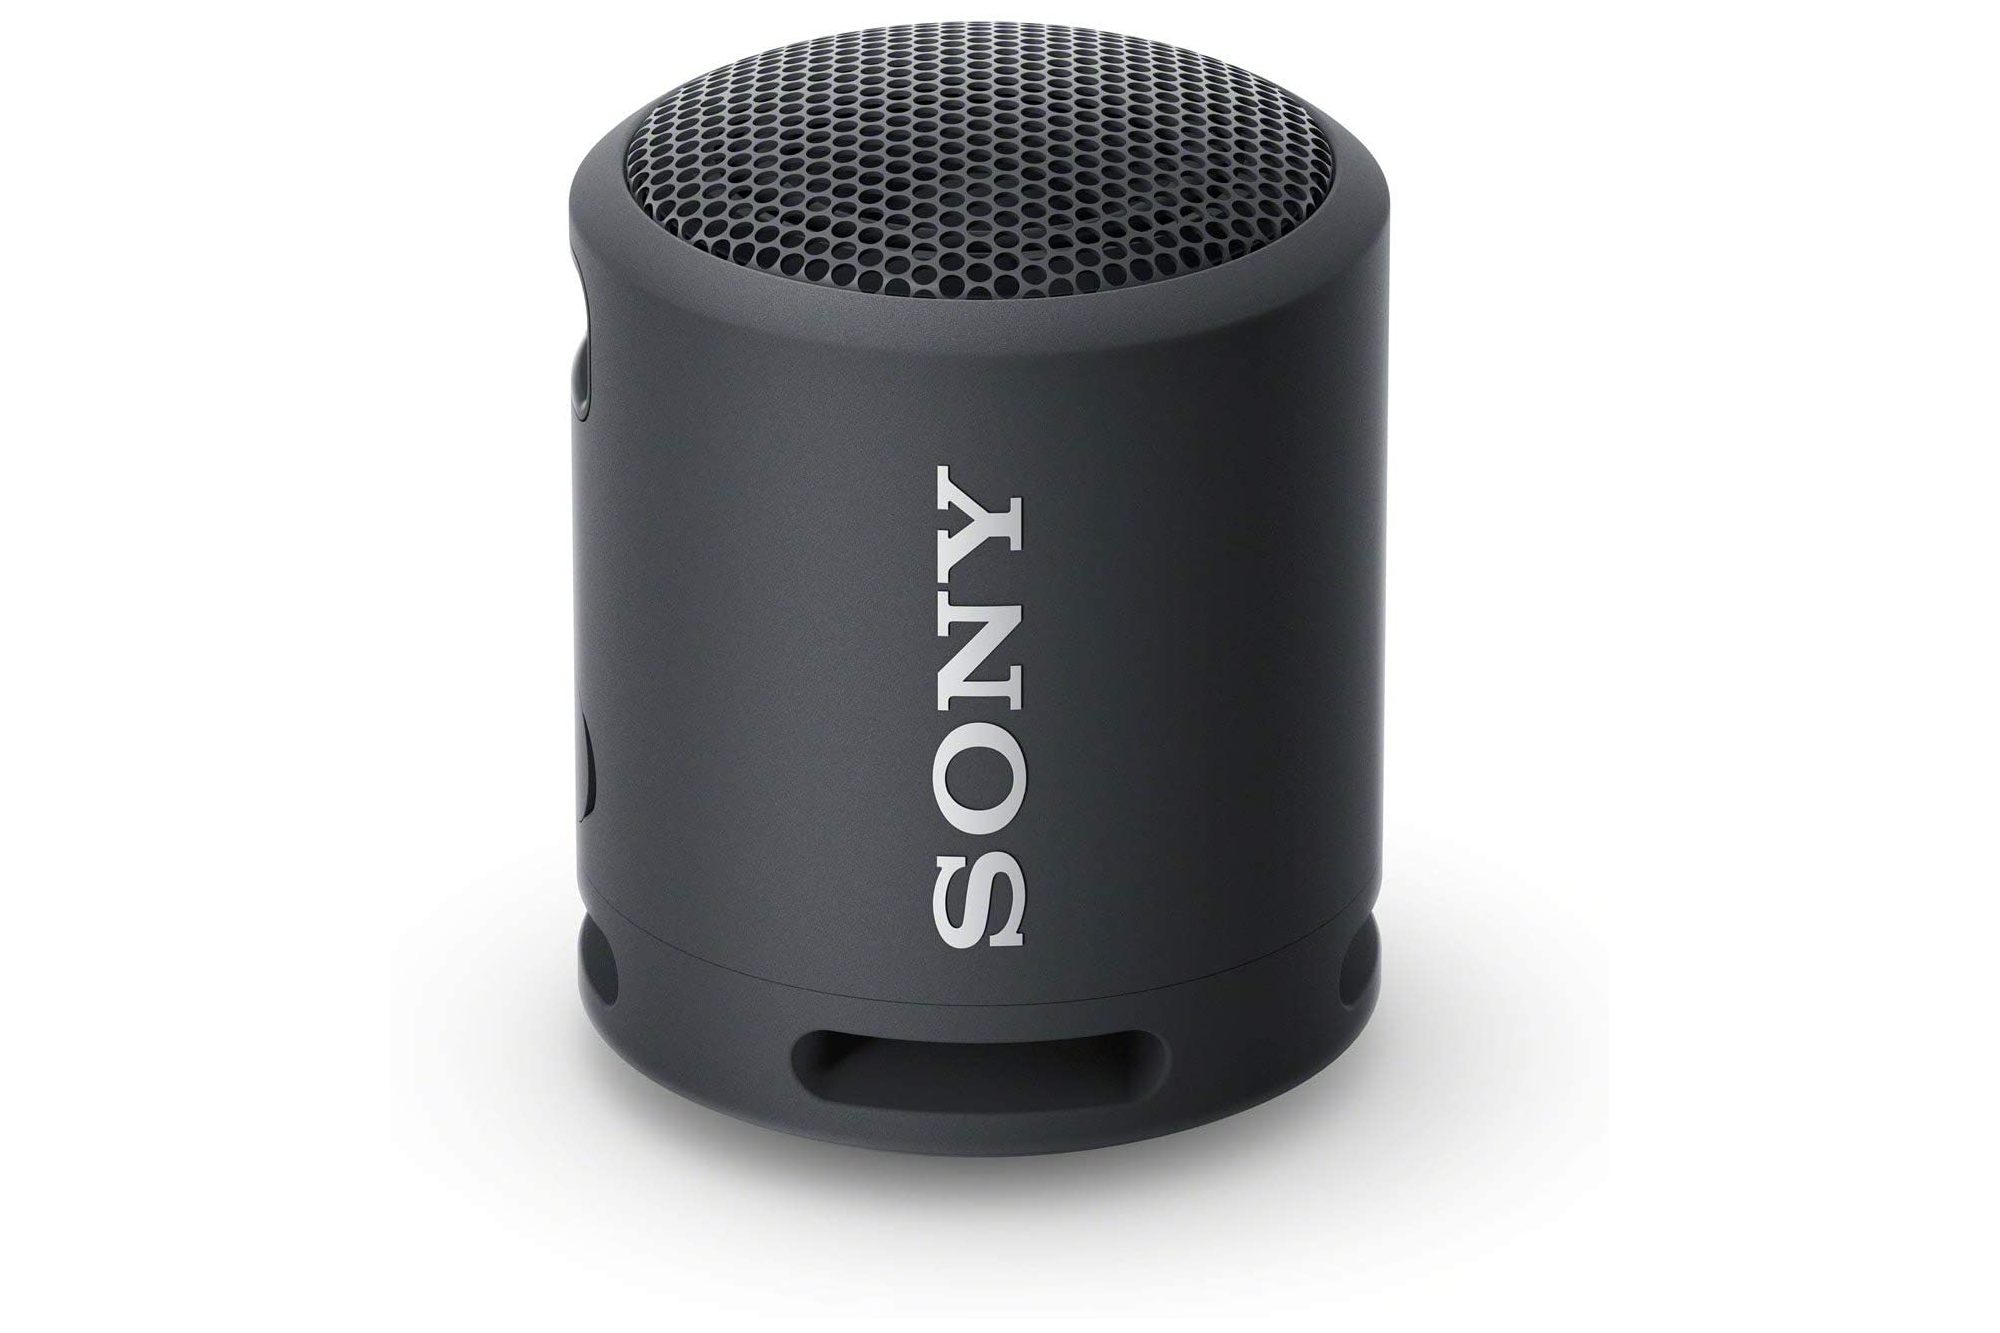 Sony SRS-XB13 Bluetooth speaker